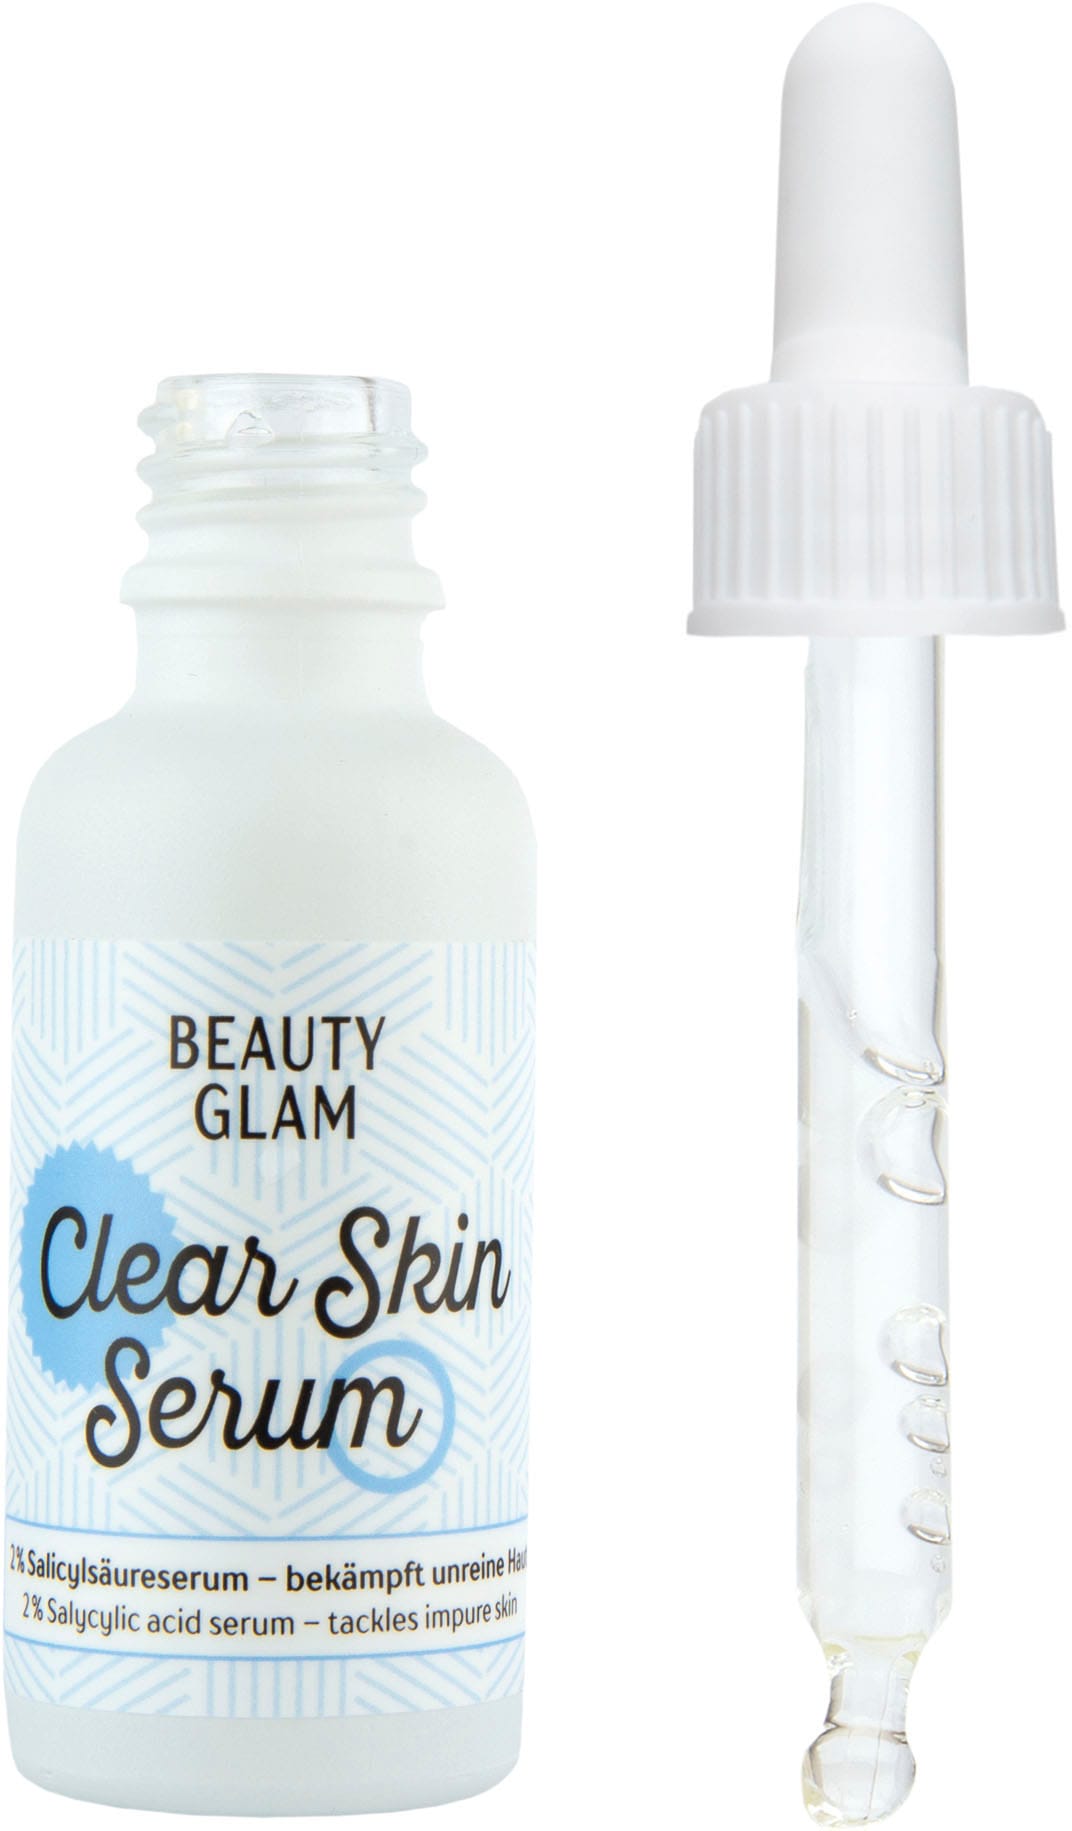 BEAUTY GLAM Gesichtsserum »Beauty Glam Clear Skin Serum«